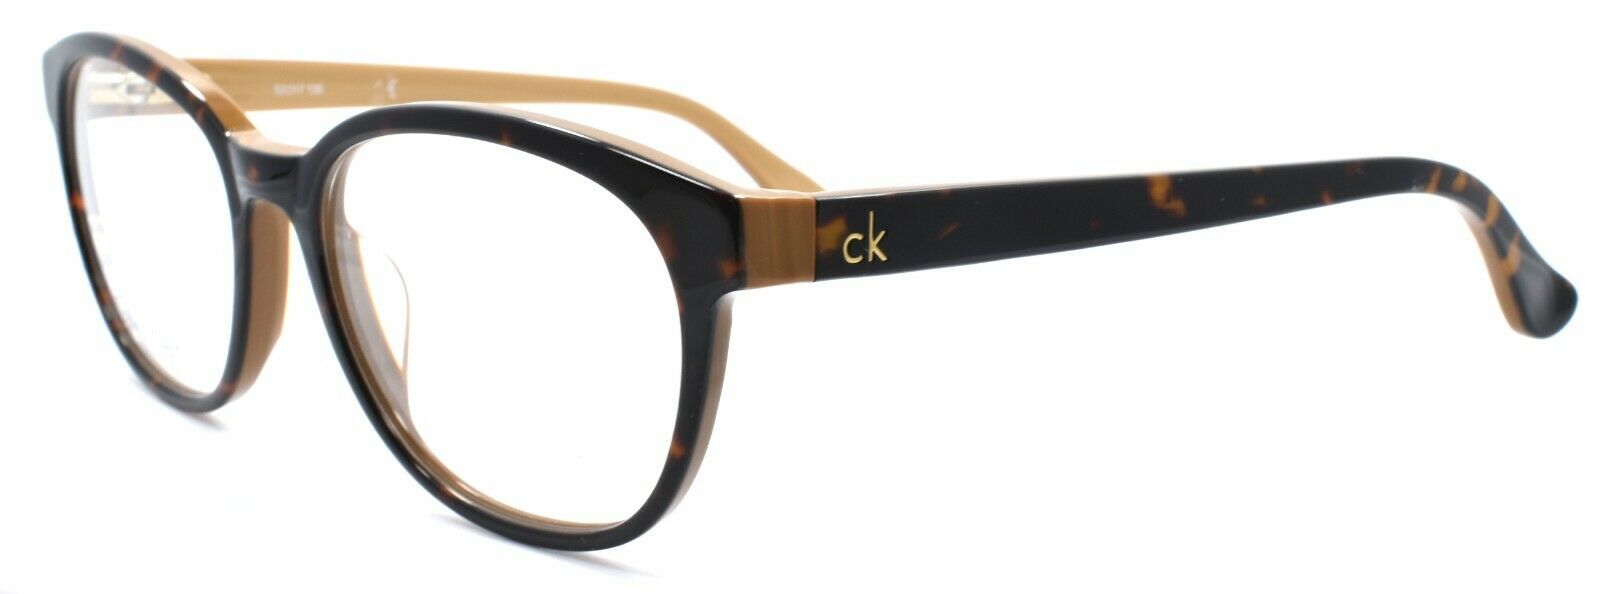 1-Calvin Klein CK5842 503 Women's Eyeglasses Frames 52-17-135 Havana / Caramel-750779069349-IKSpecs